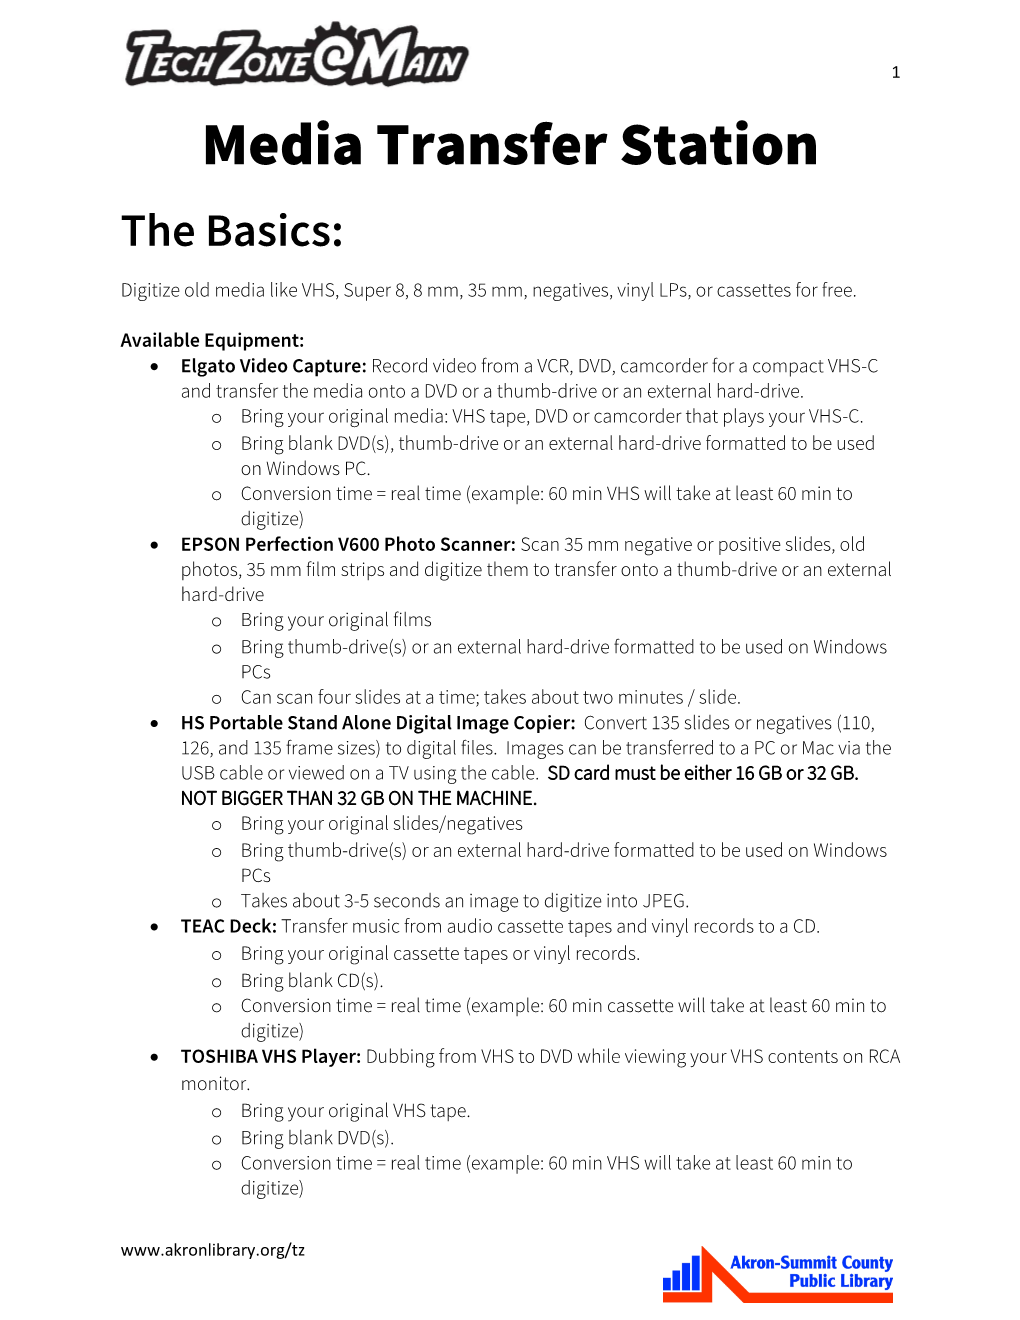 Media Transfer Station the Basics